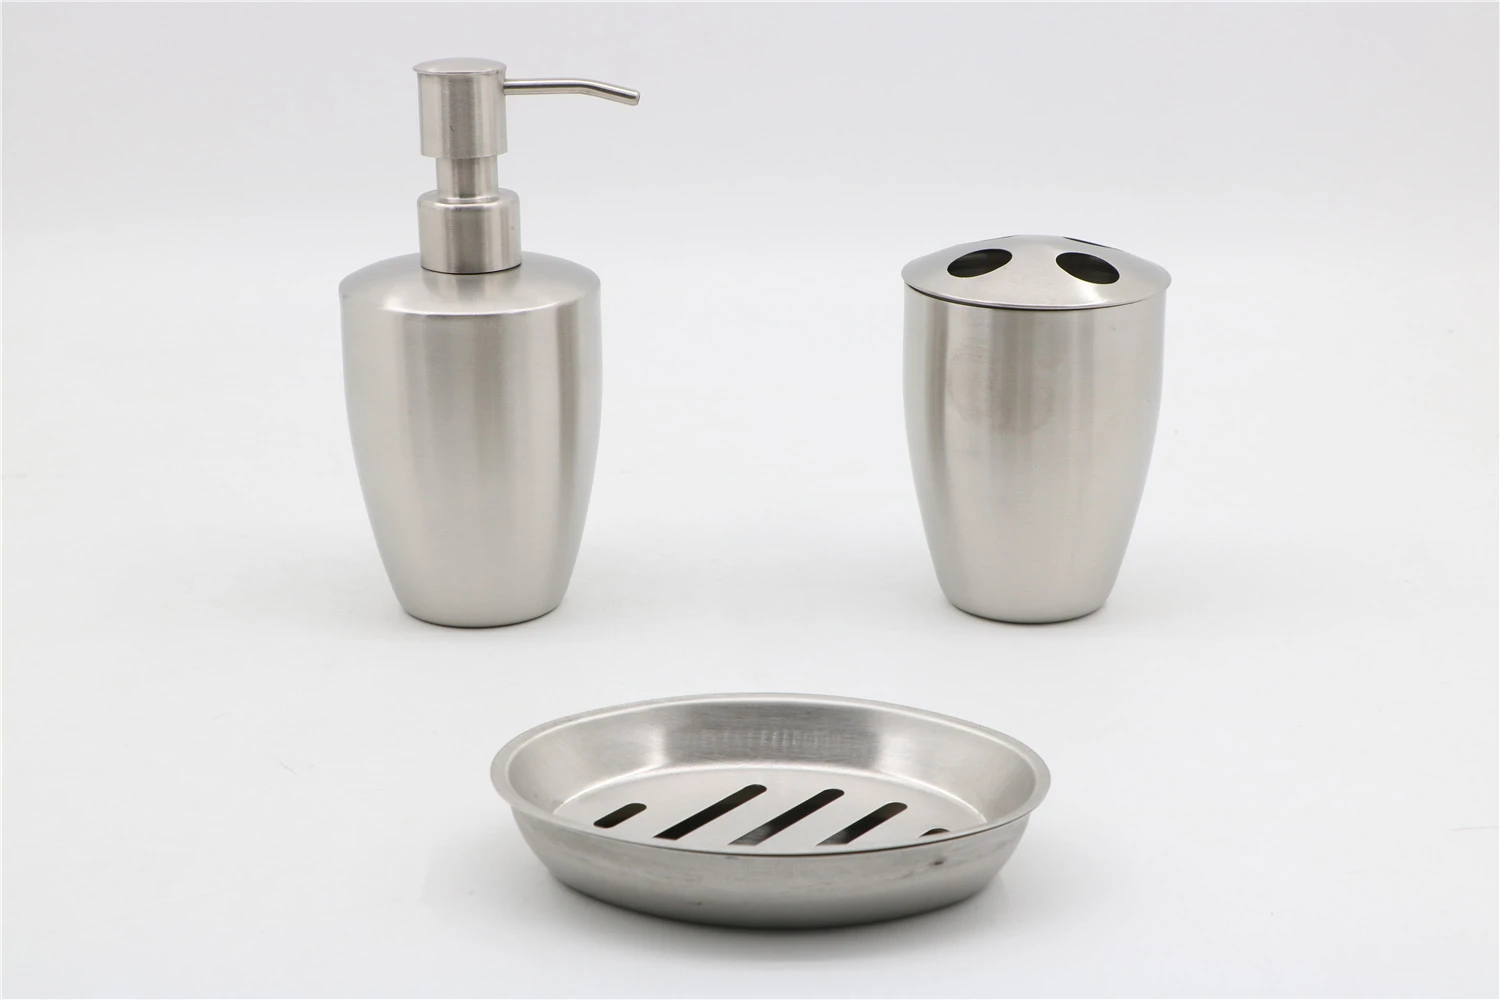 High Quality Stainless Steel Bathroom Steel Hardware bathroom accessories Set